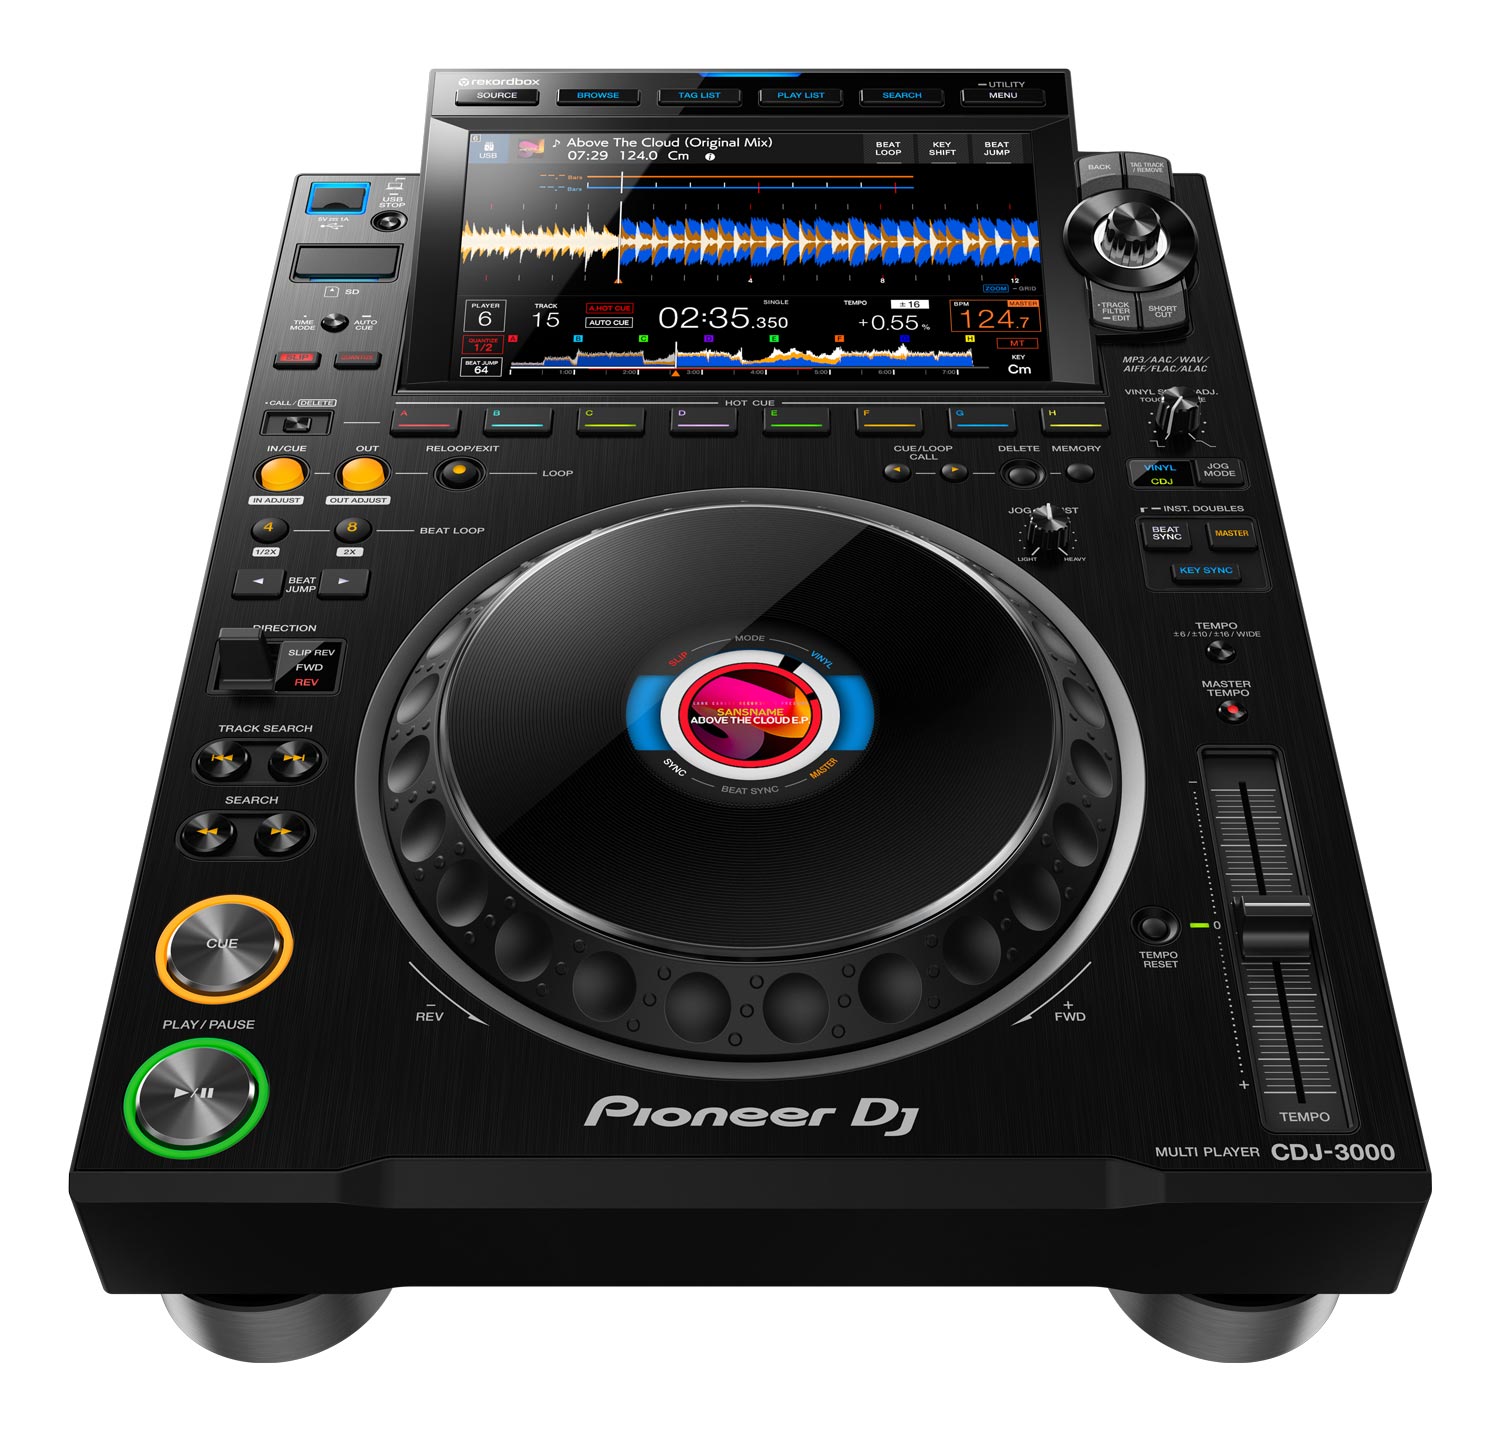 PIONEER CDJ-900nexus | Professional Multi-Player, CD/MP3 